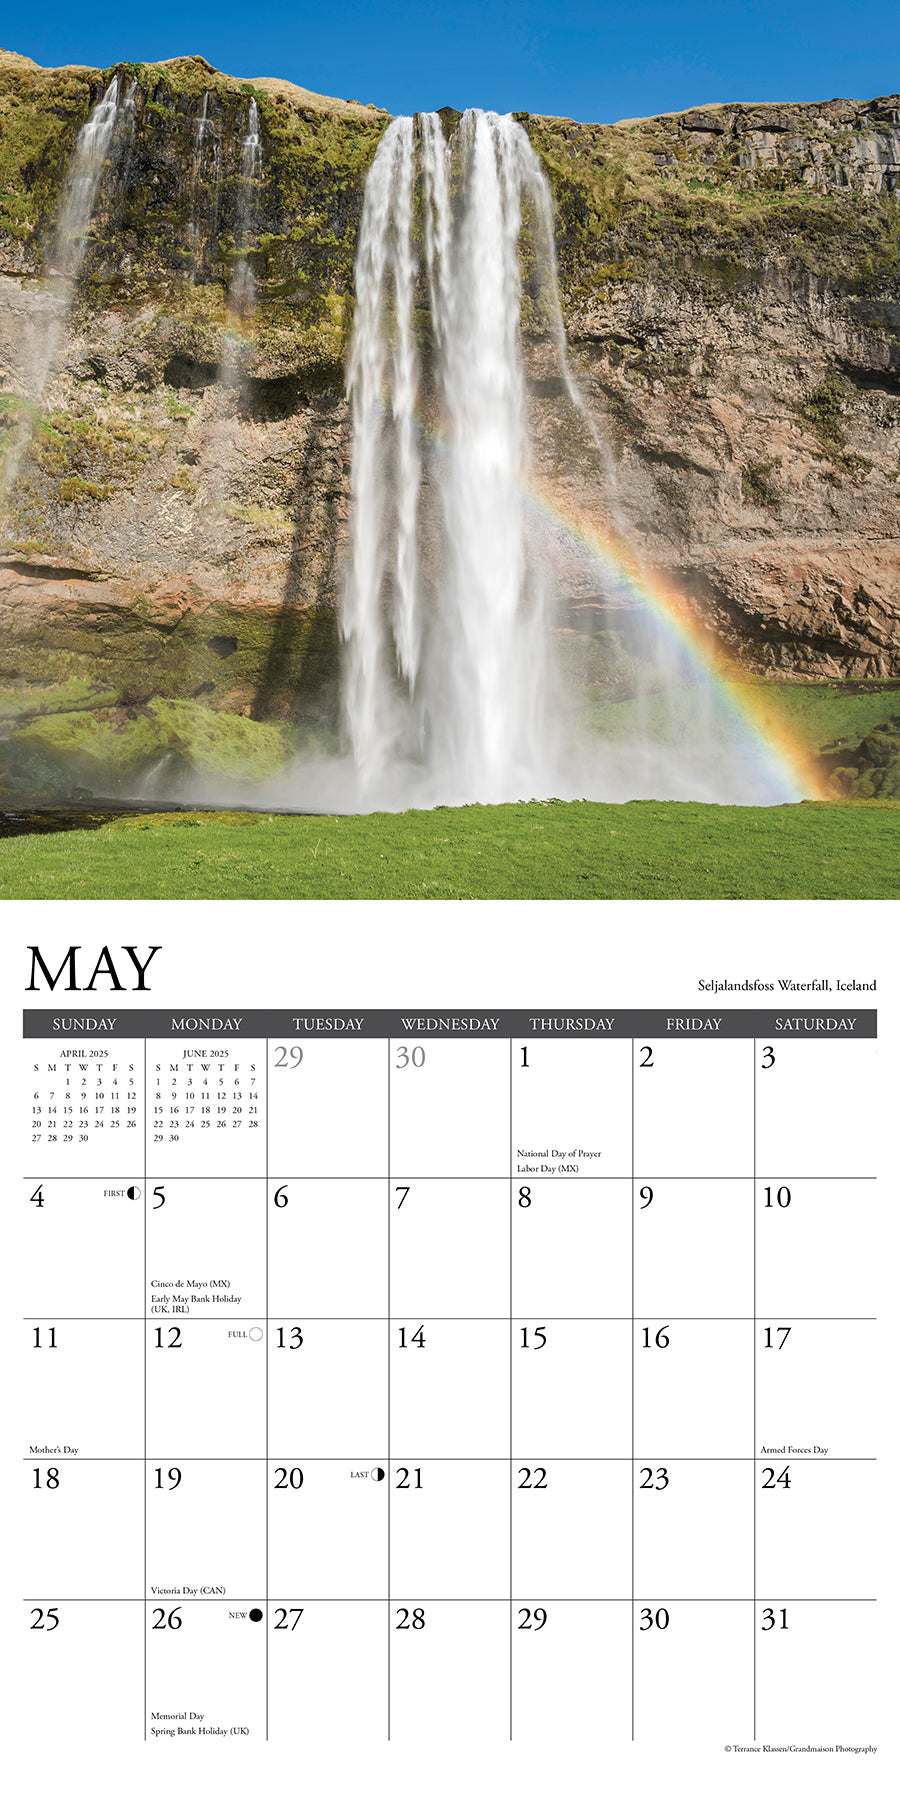 2025 Waterfalls - Square Wall Calendar